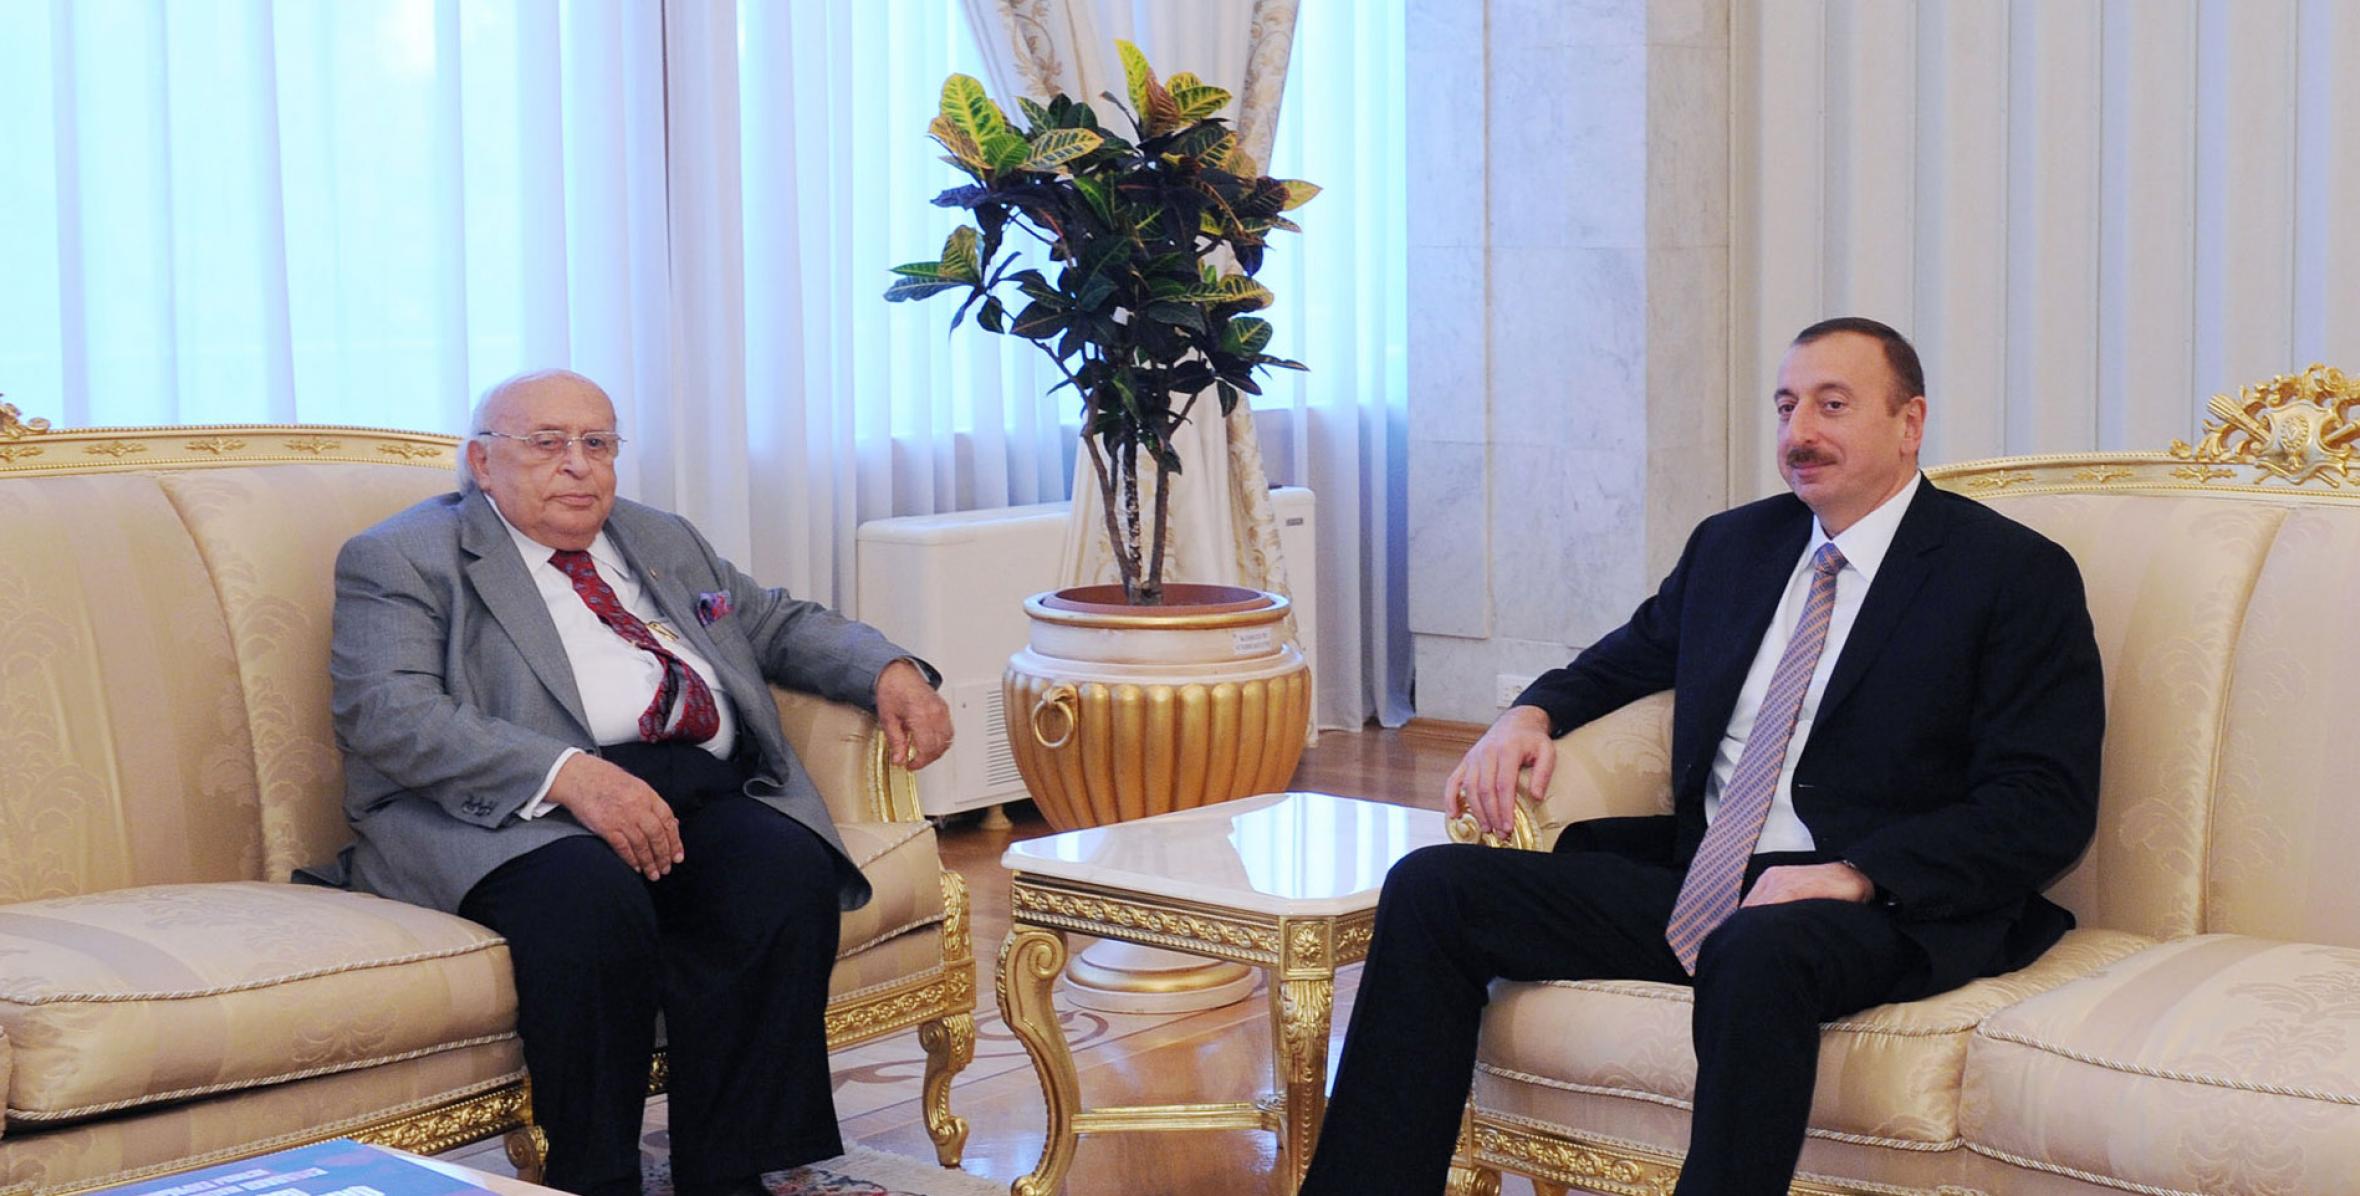 Ninth President of the Republic of Turkey Suleyman Demirel met with Ilham Aliyev